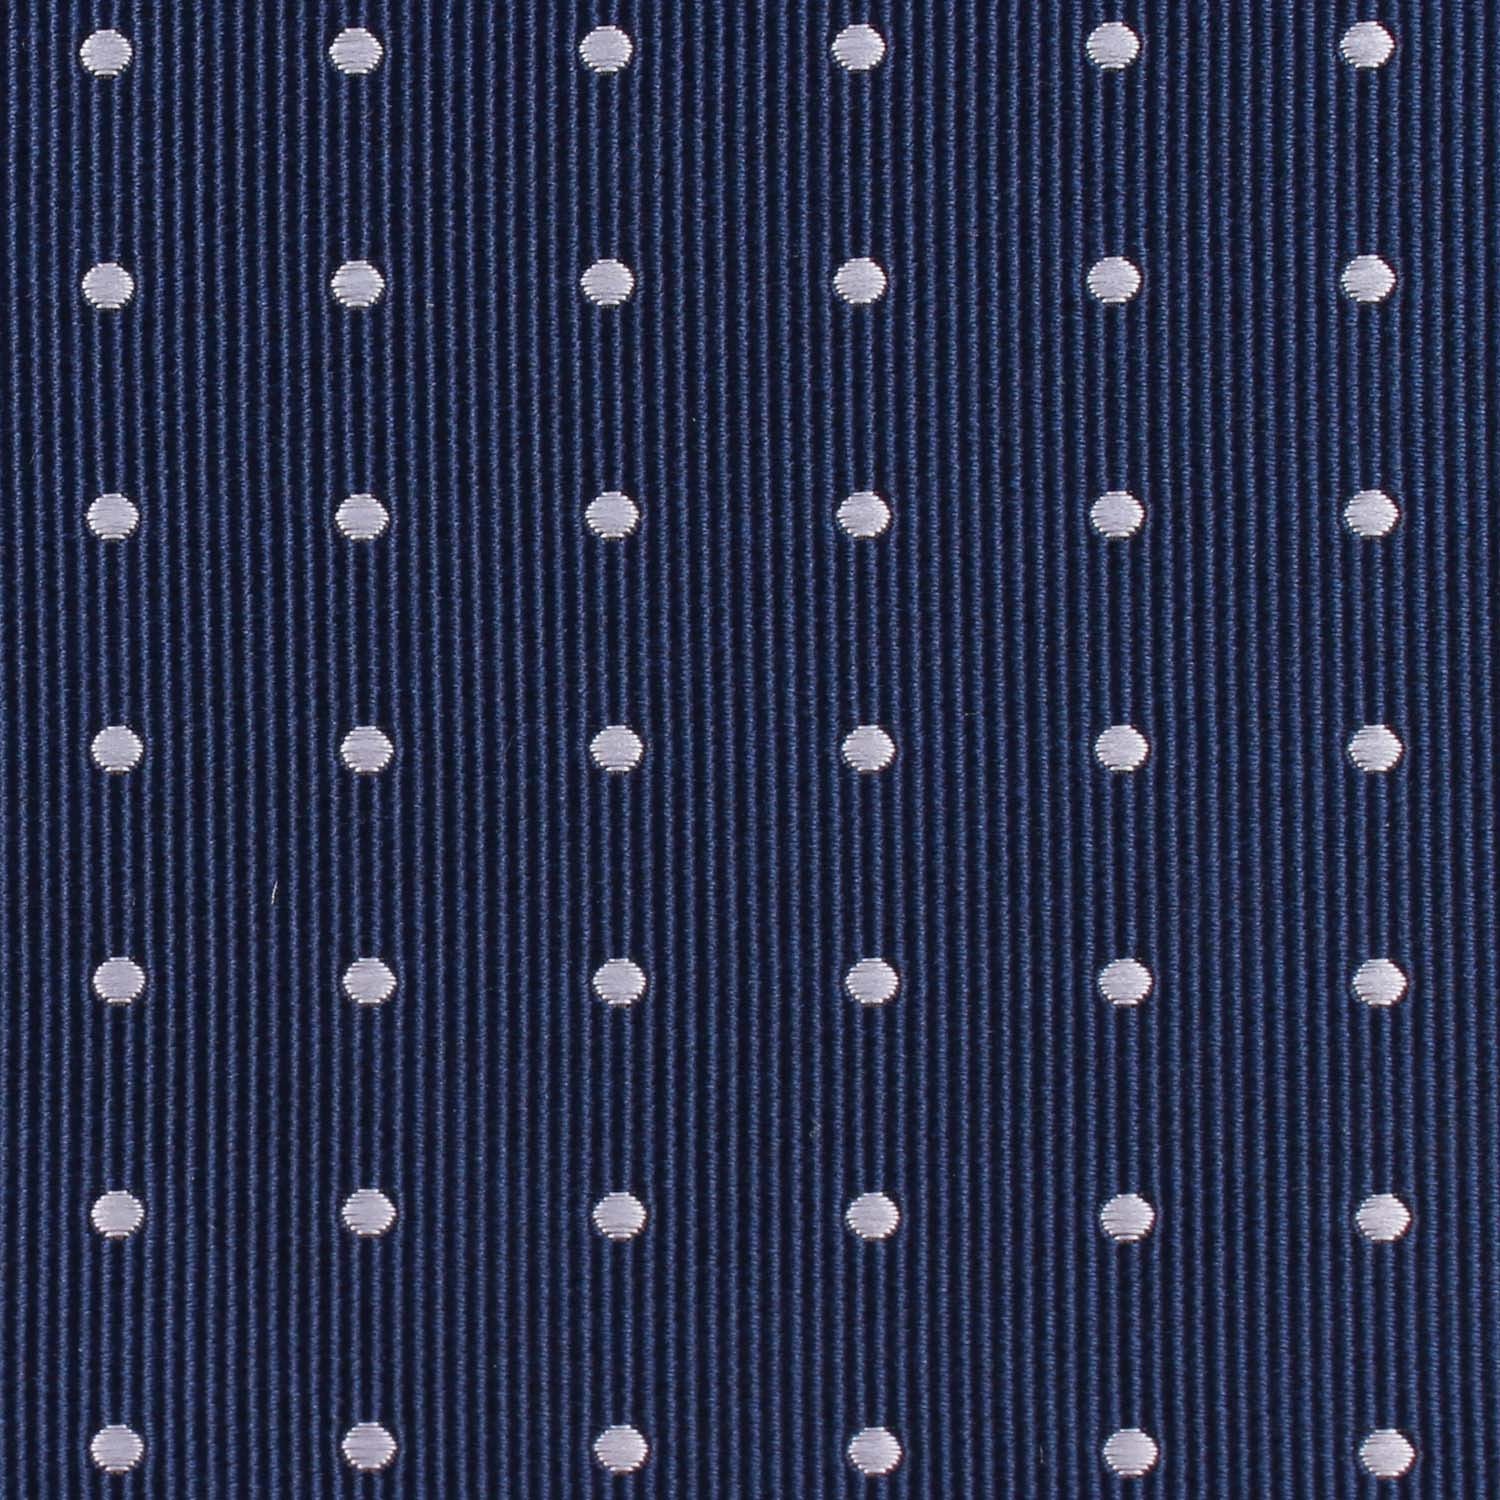 The OTAA Navy Blue with White Polka Dots Fabric Necktie M131